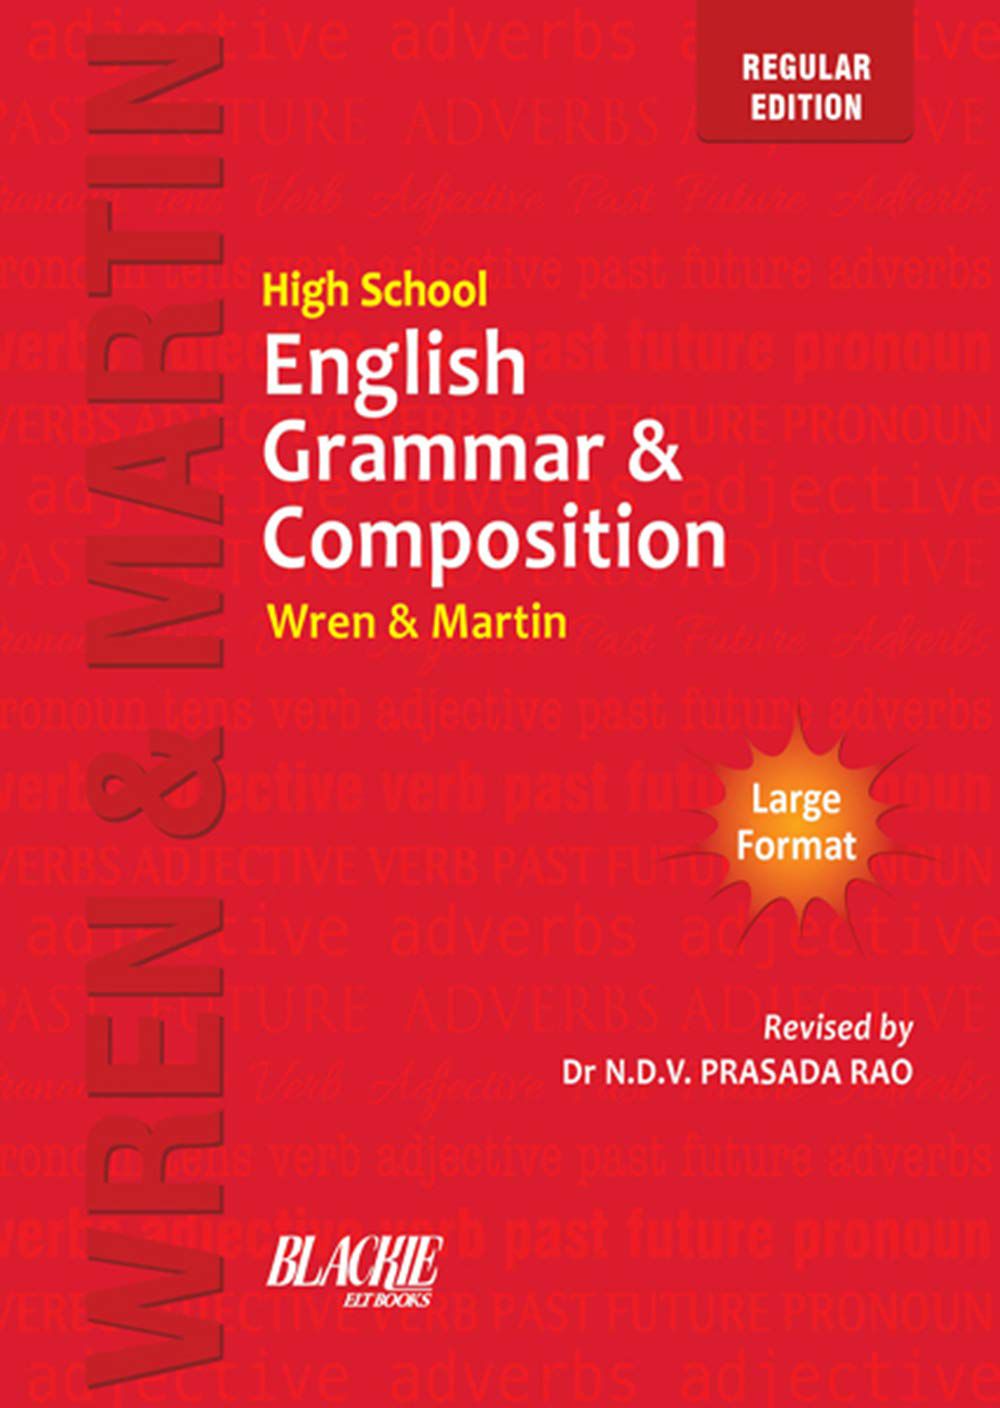     			High School English Grammar & Composition Paperback - English